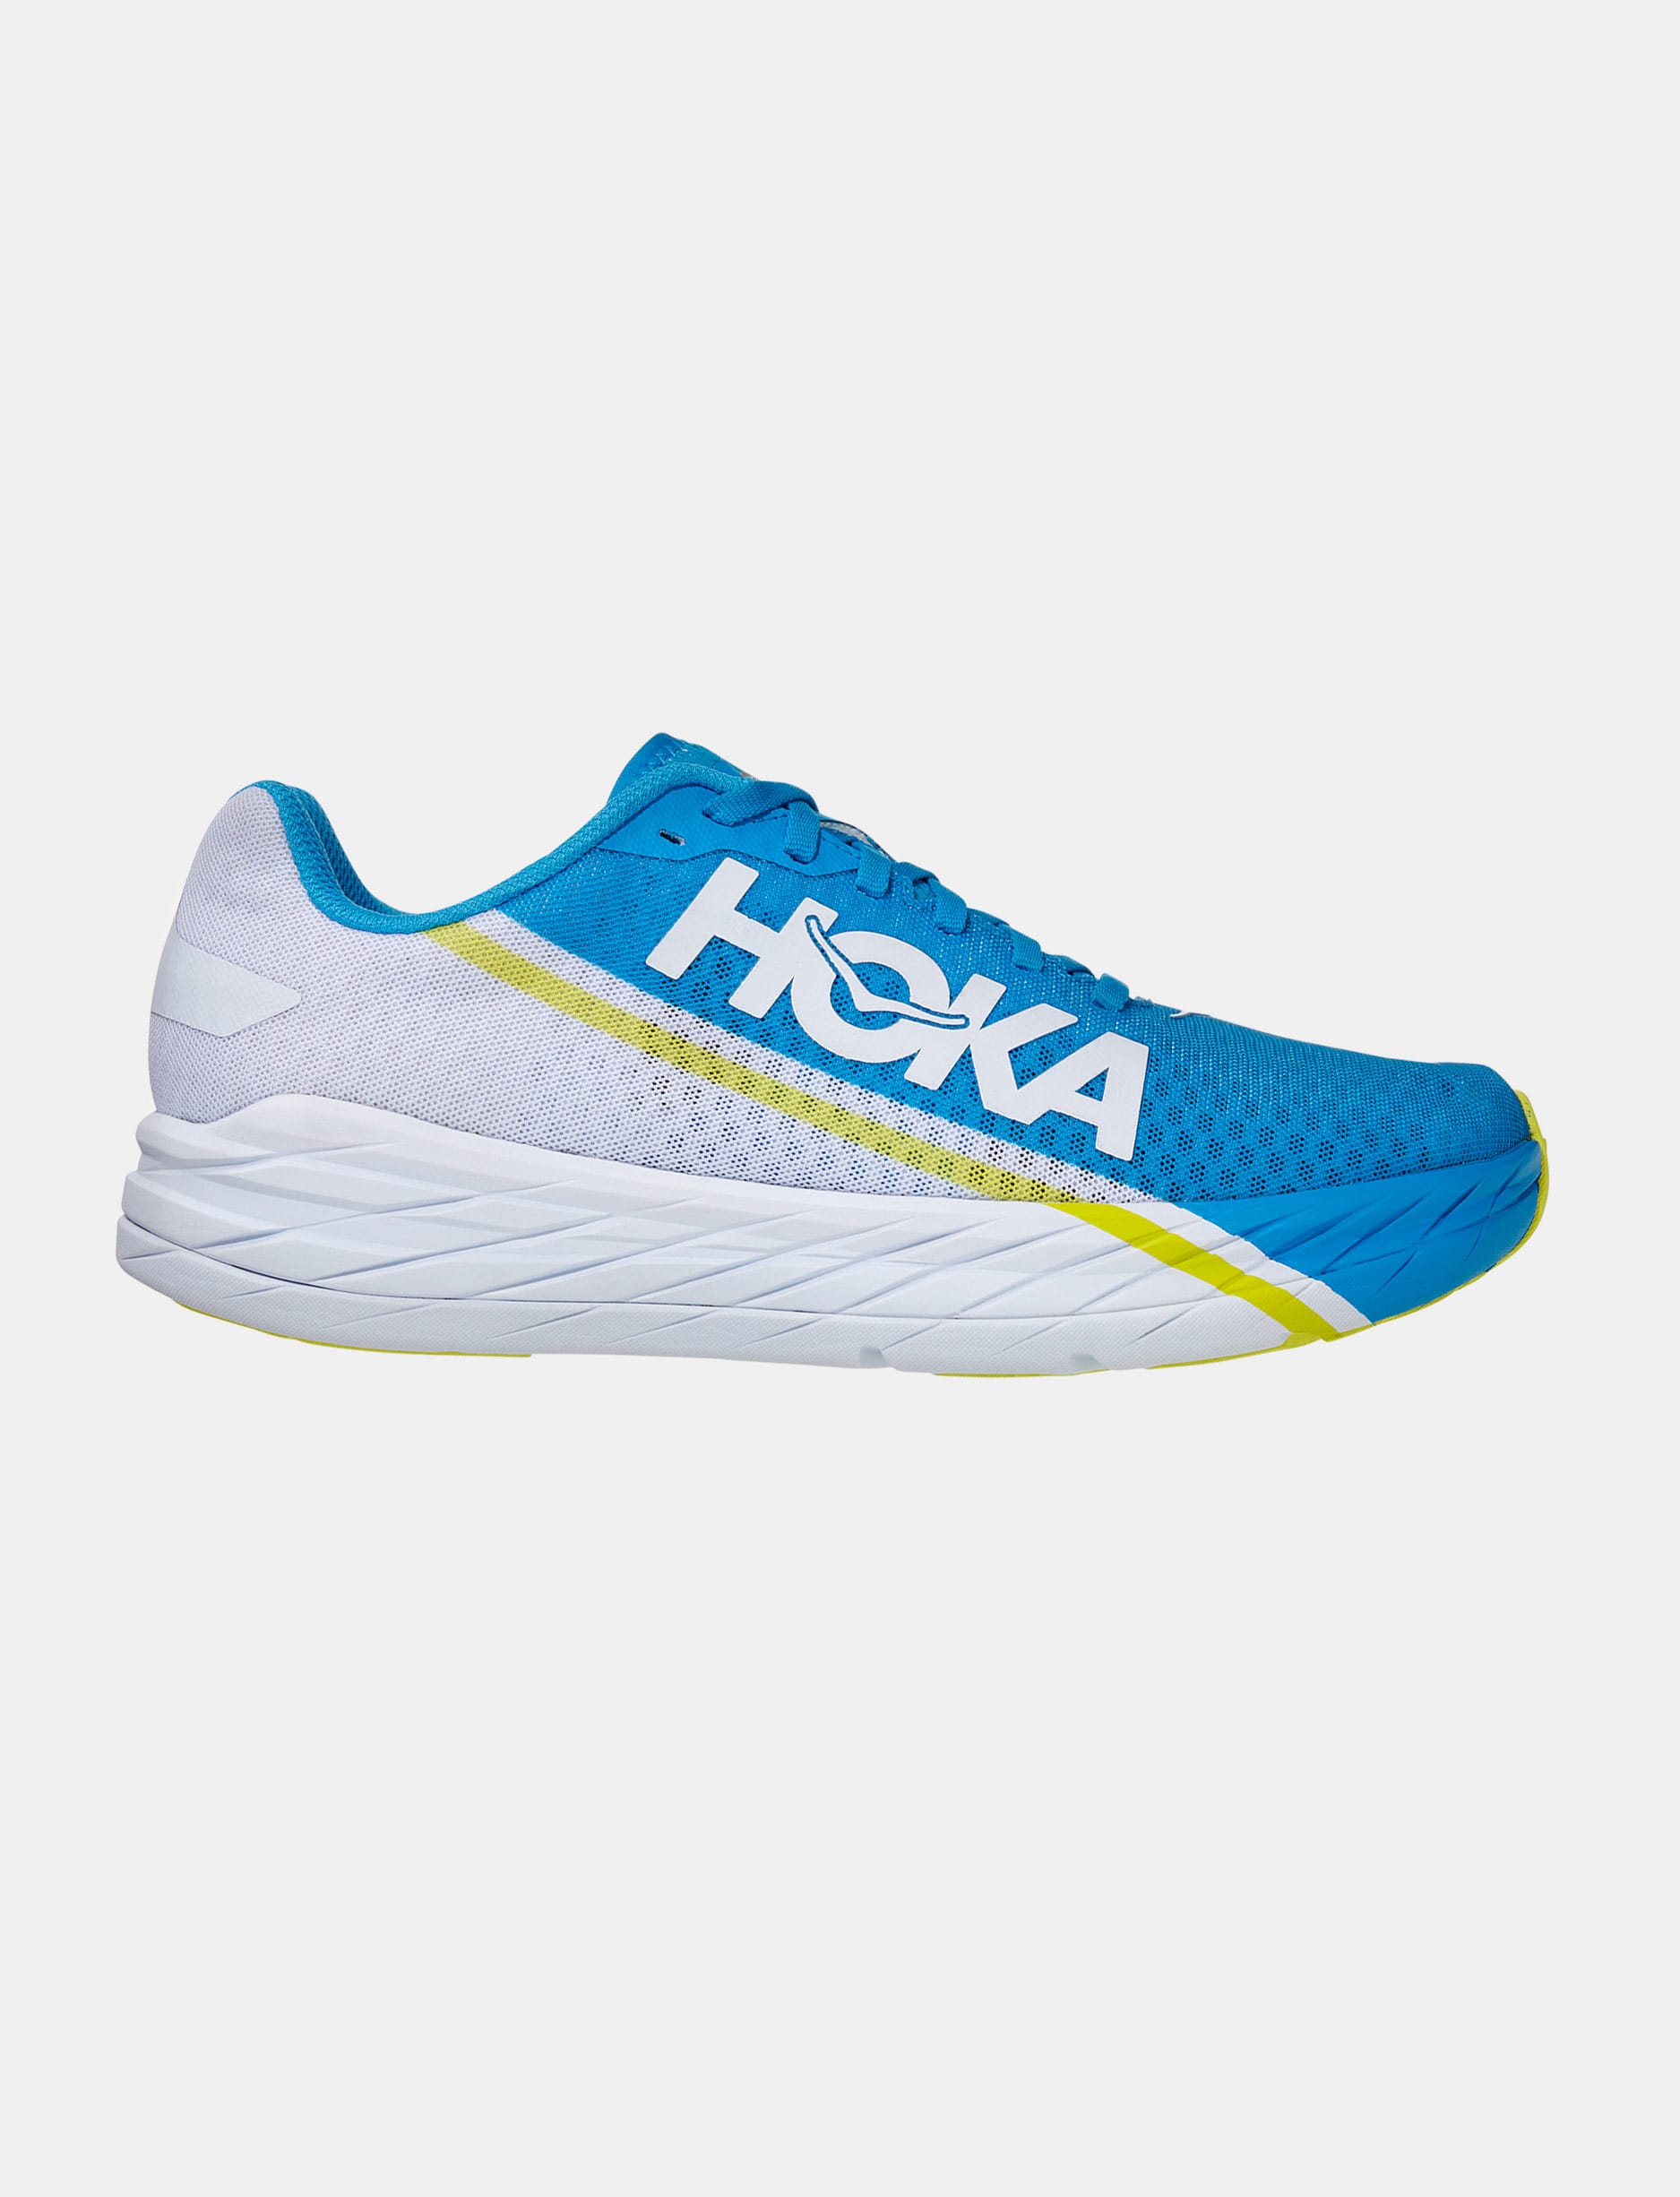 Hoka Rocket X - נעלי ספורט גברים/נשים הוקה רוקט איקס